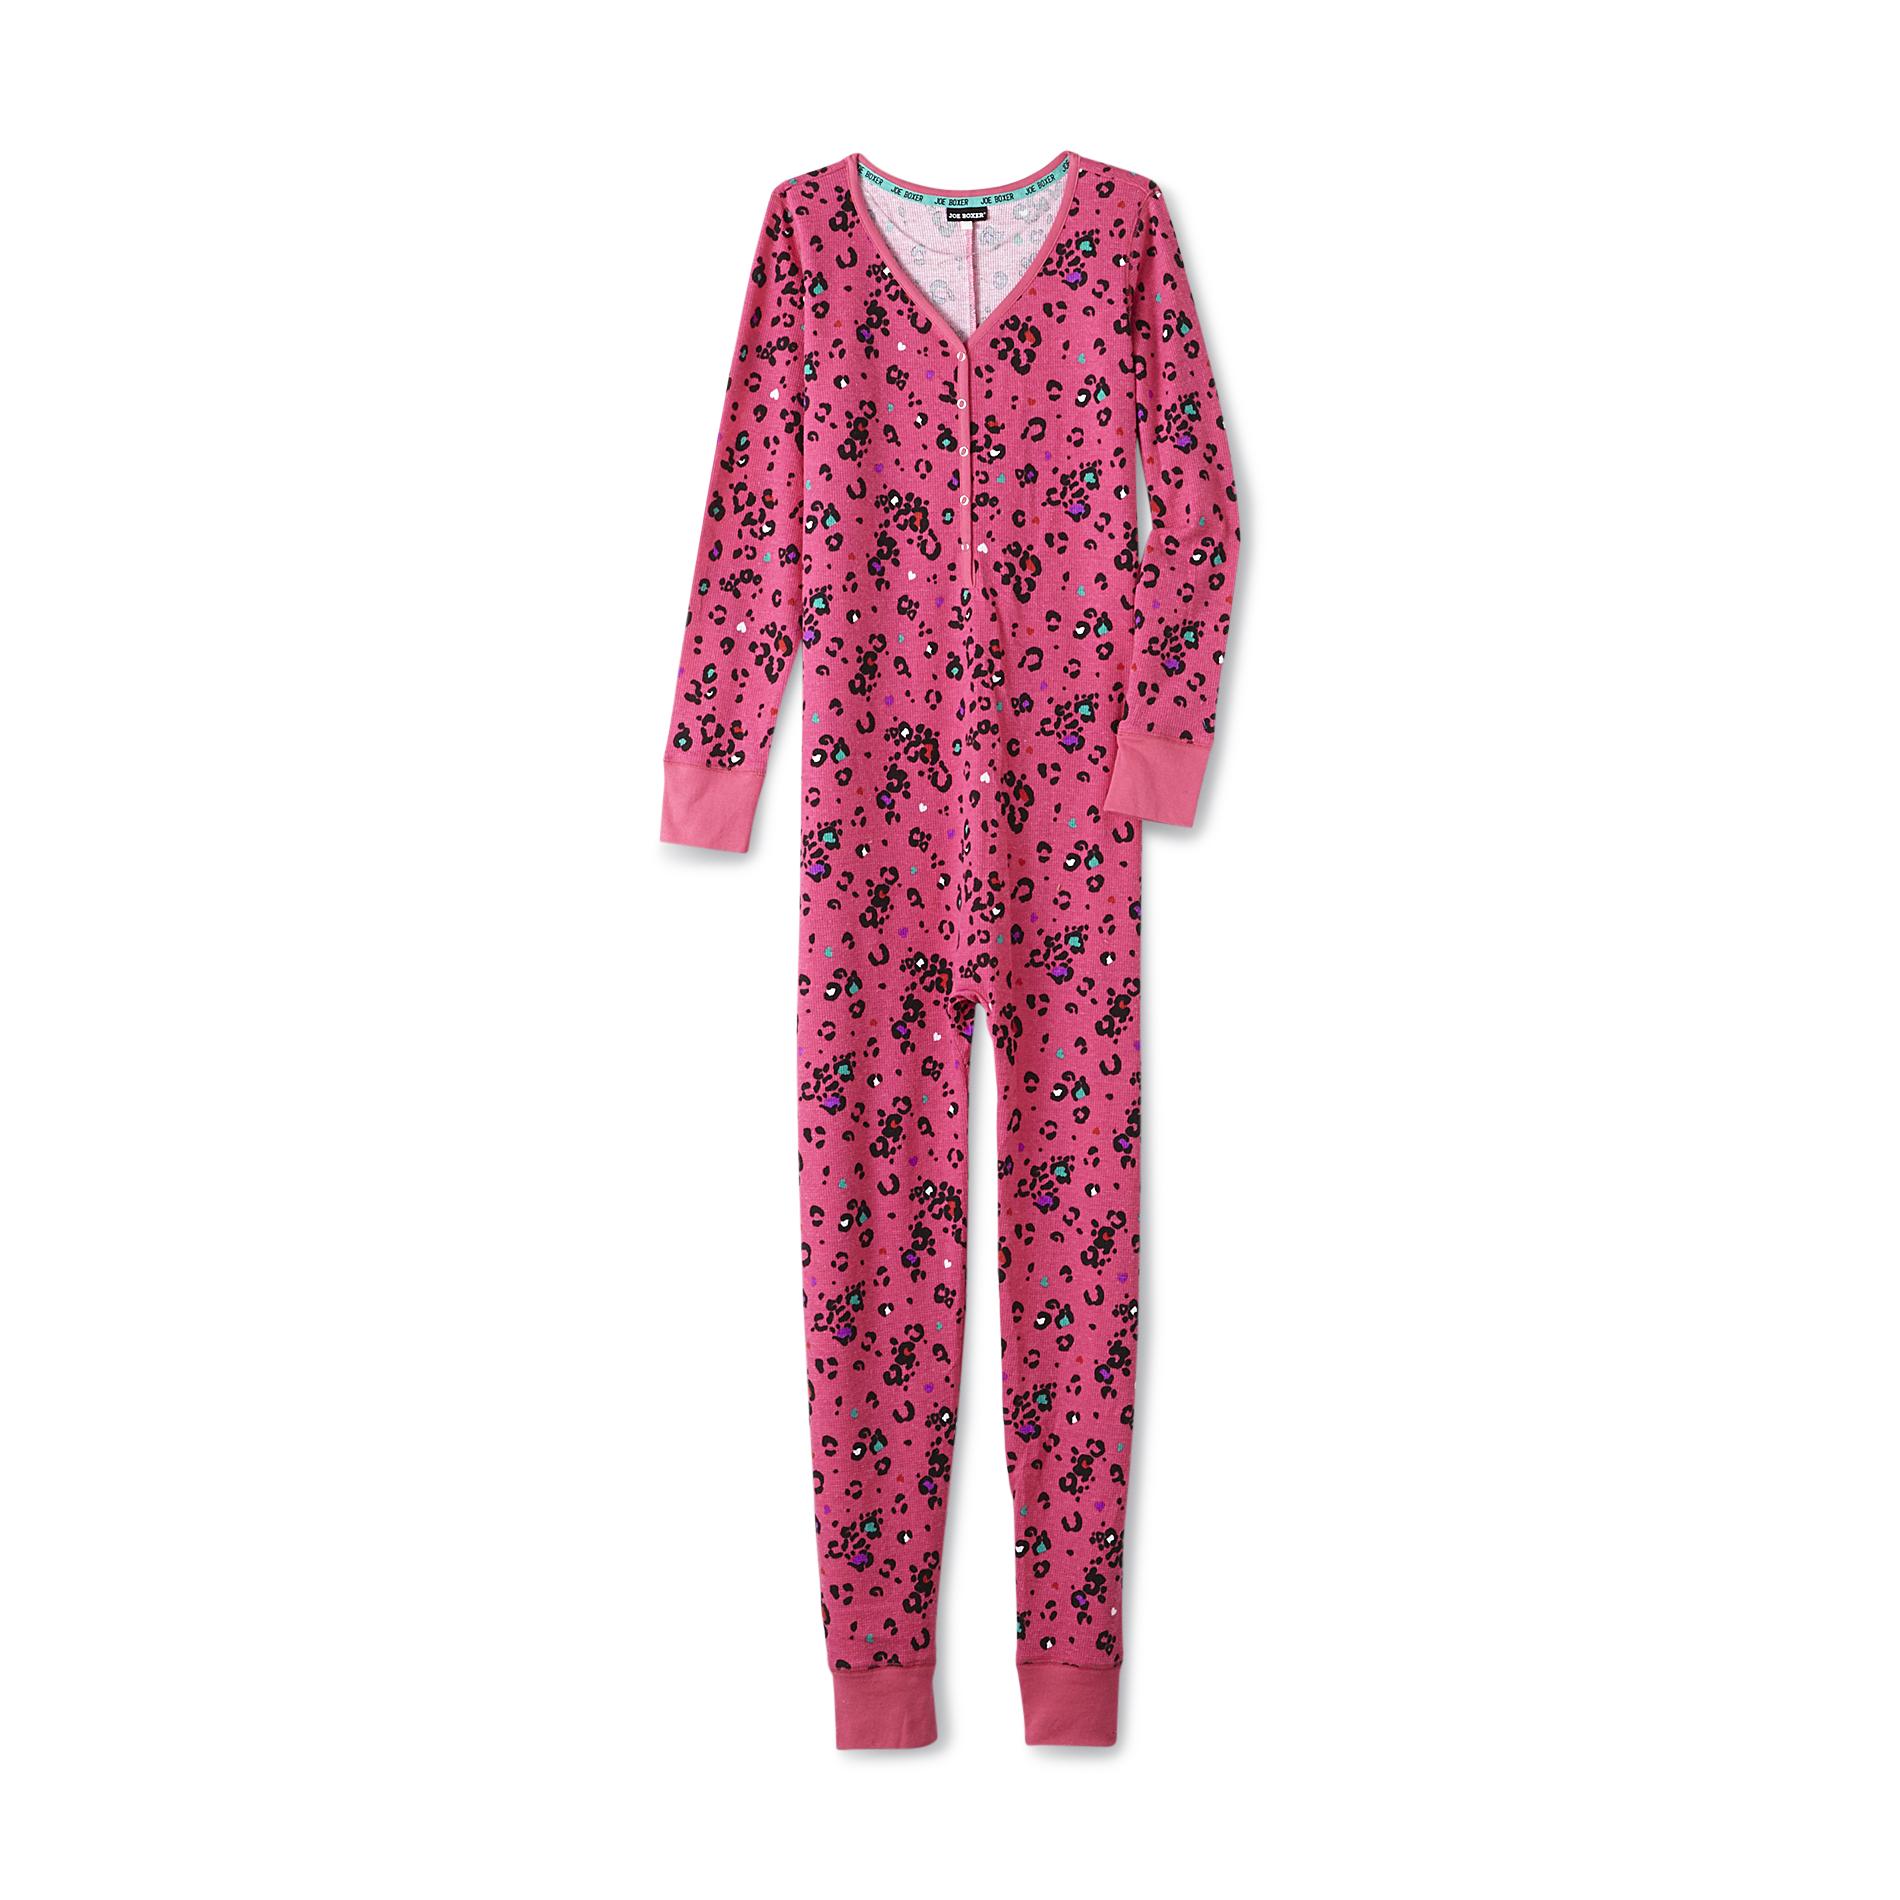 Joe Boxer Women's One-Piece Pajamas - Leopard Print